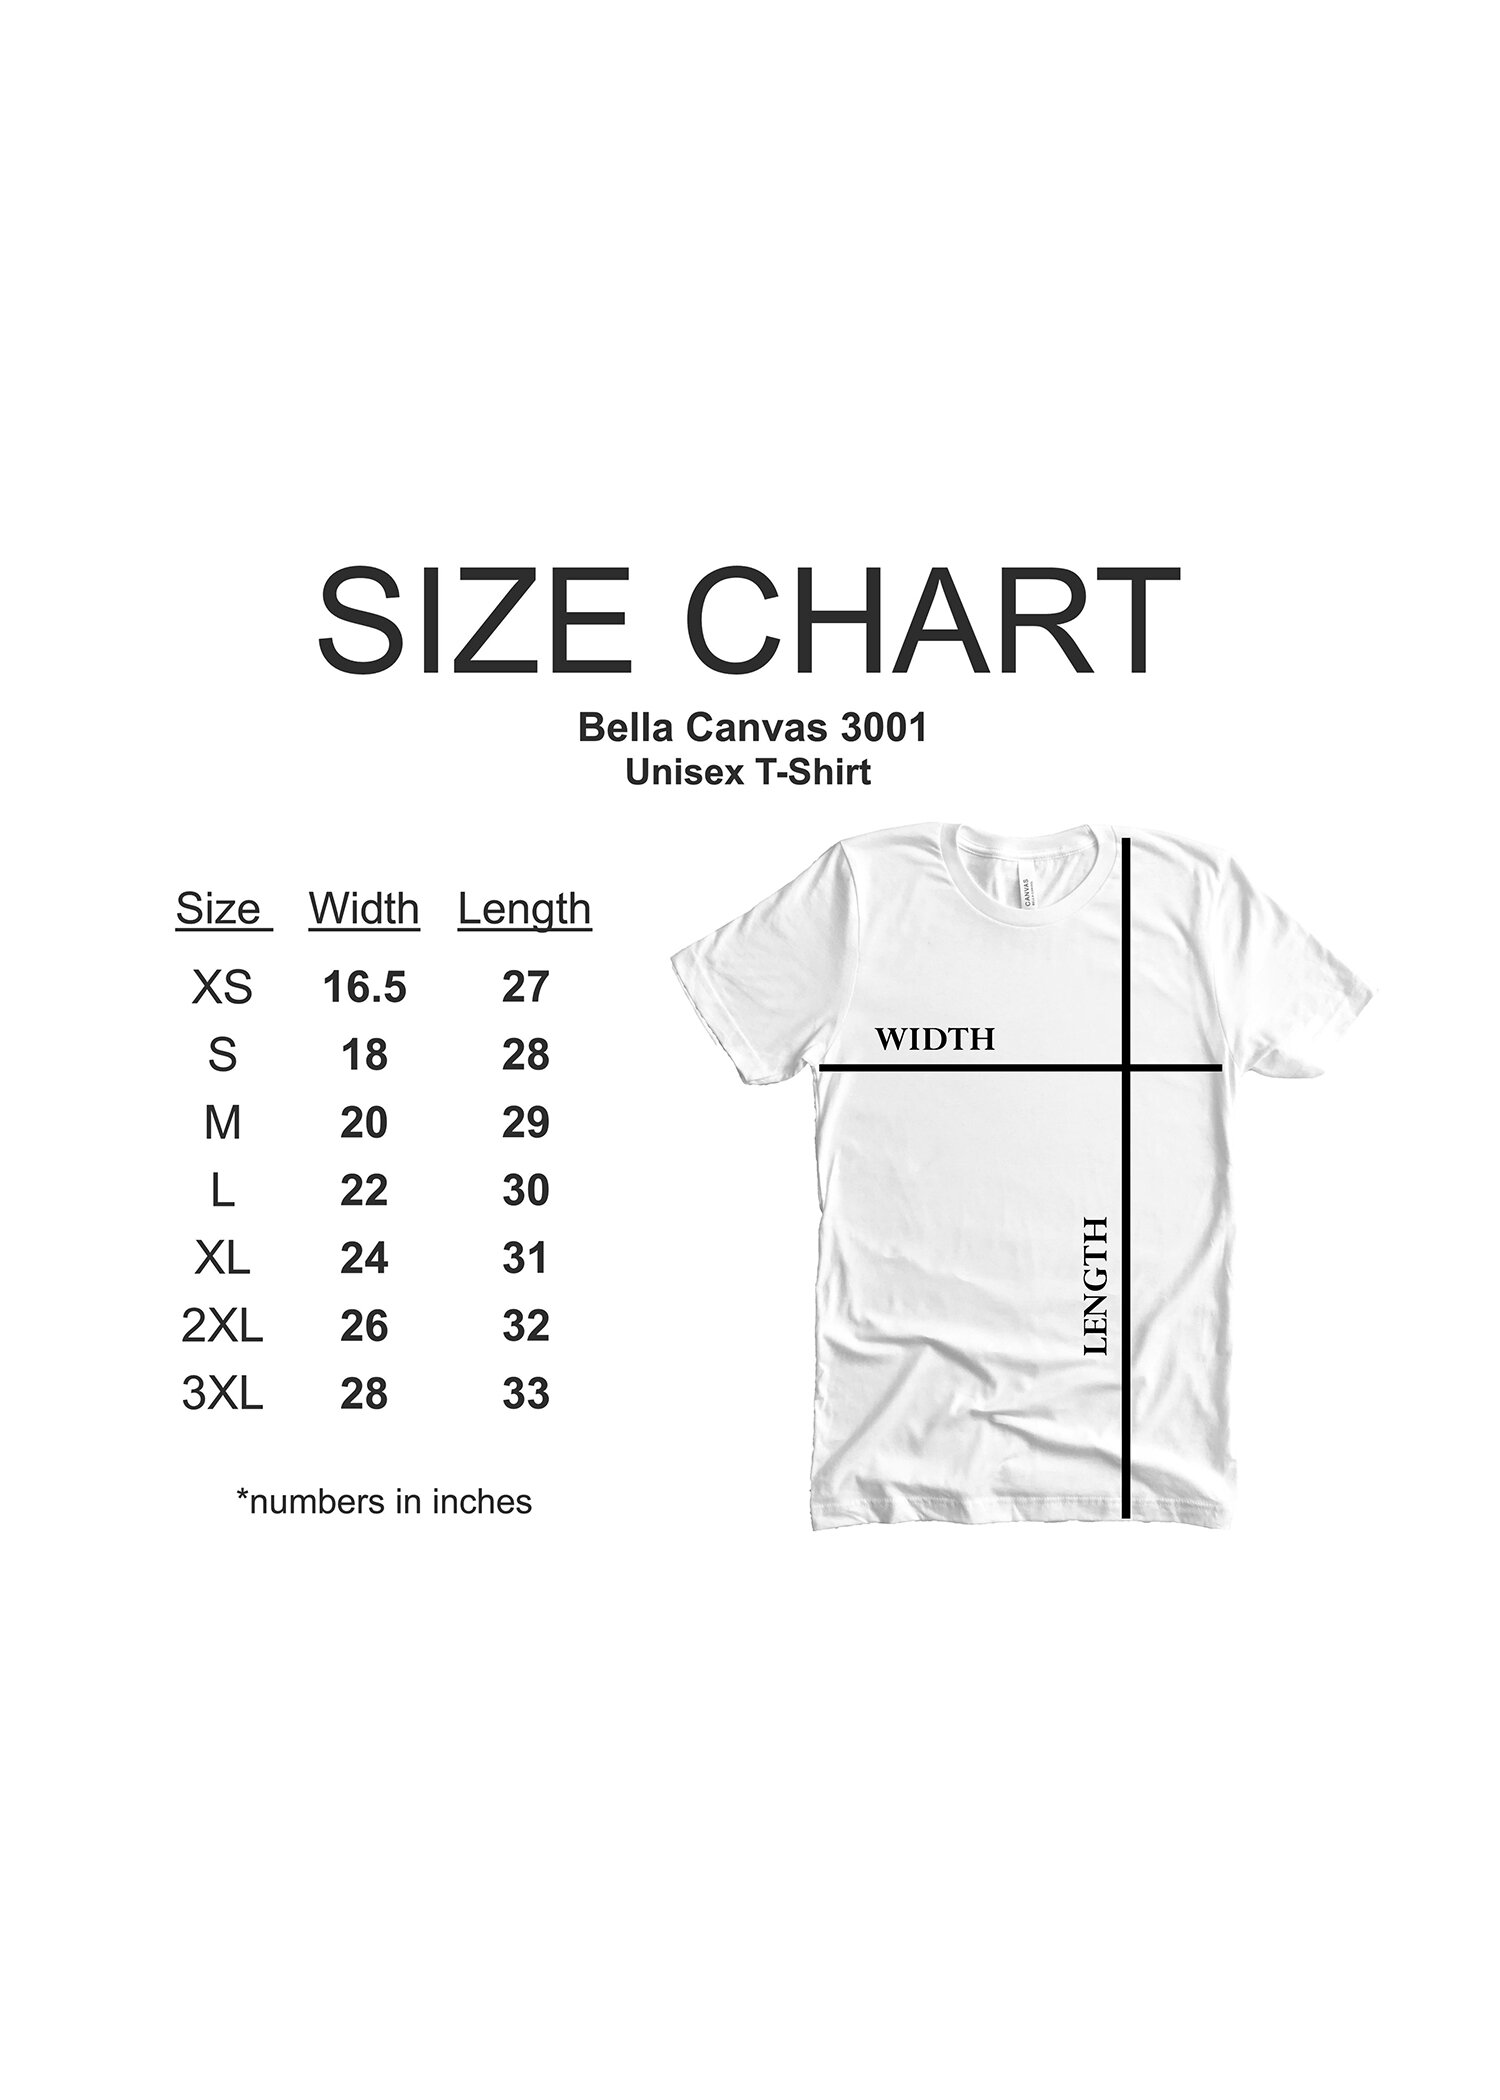 Size Chart FREE Mockup Mauve 3001 Unisex T-Shirt Unisex Chart Pink Sky Background 3001 Size Chart Bella Canvas